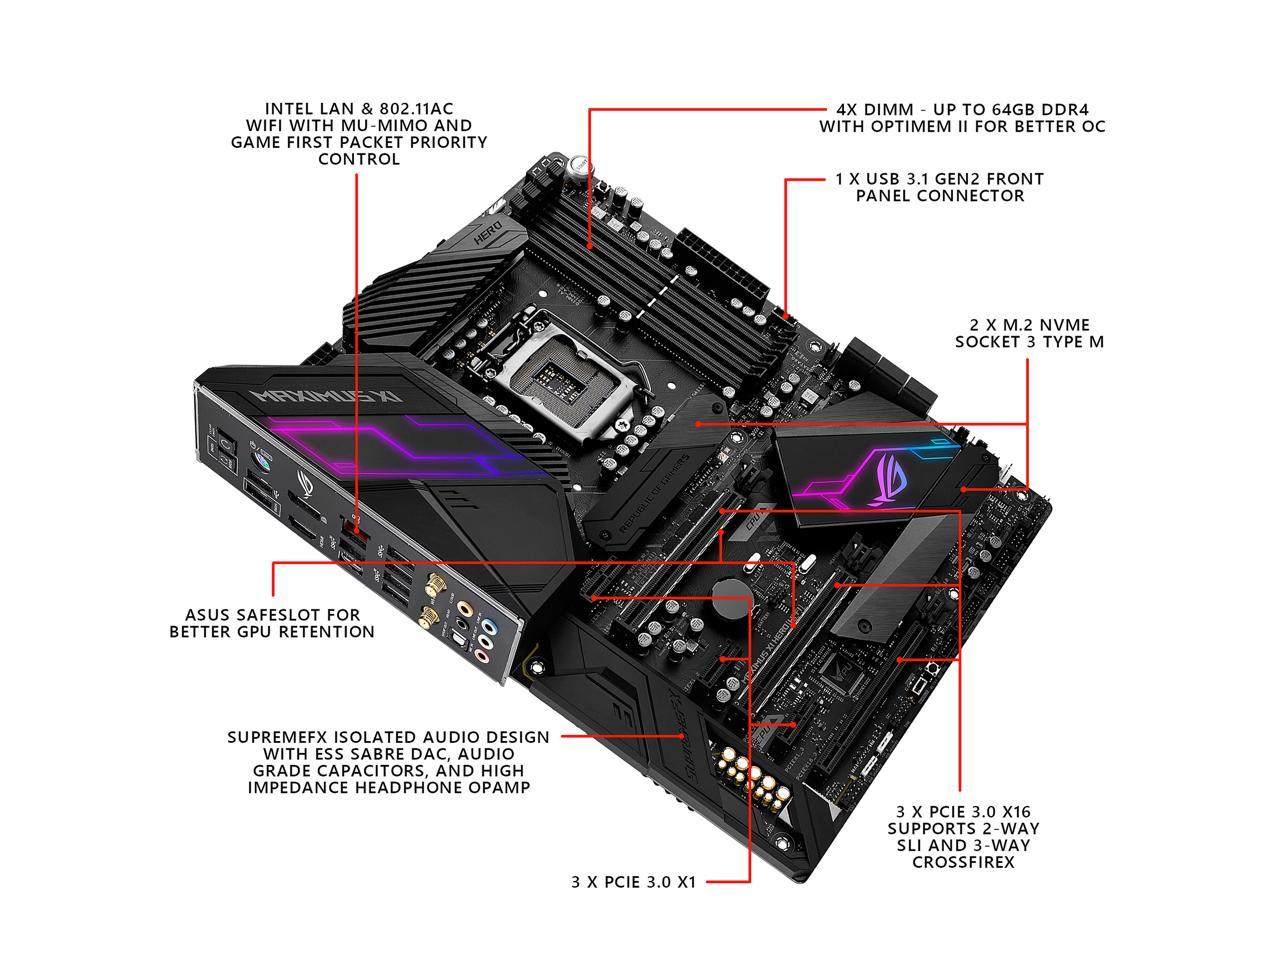 ASUS ROG Maximus XI Hero (Wi-Fi) Z390 Gaming Motherboard LGA1151 (Intel 8th and 9th Gen) ATX DDR4 DP HDMI M.2 USB 3.1 Gen2 Onboard 802.11 ac